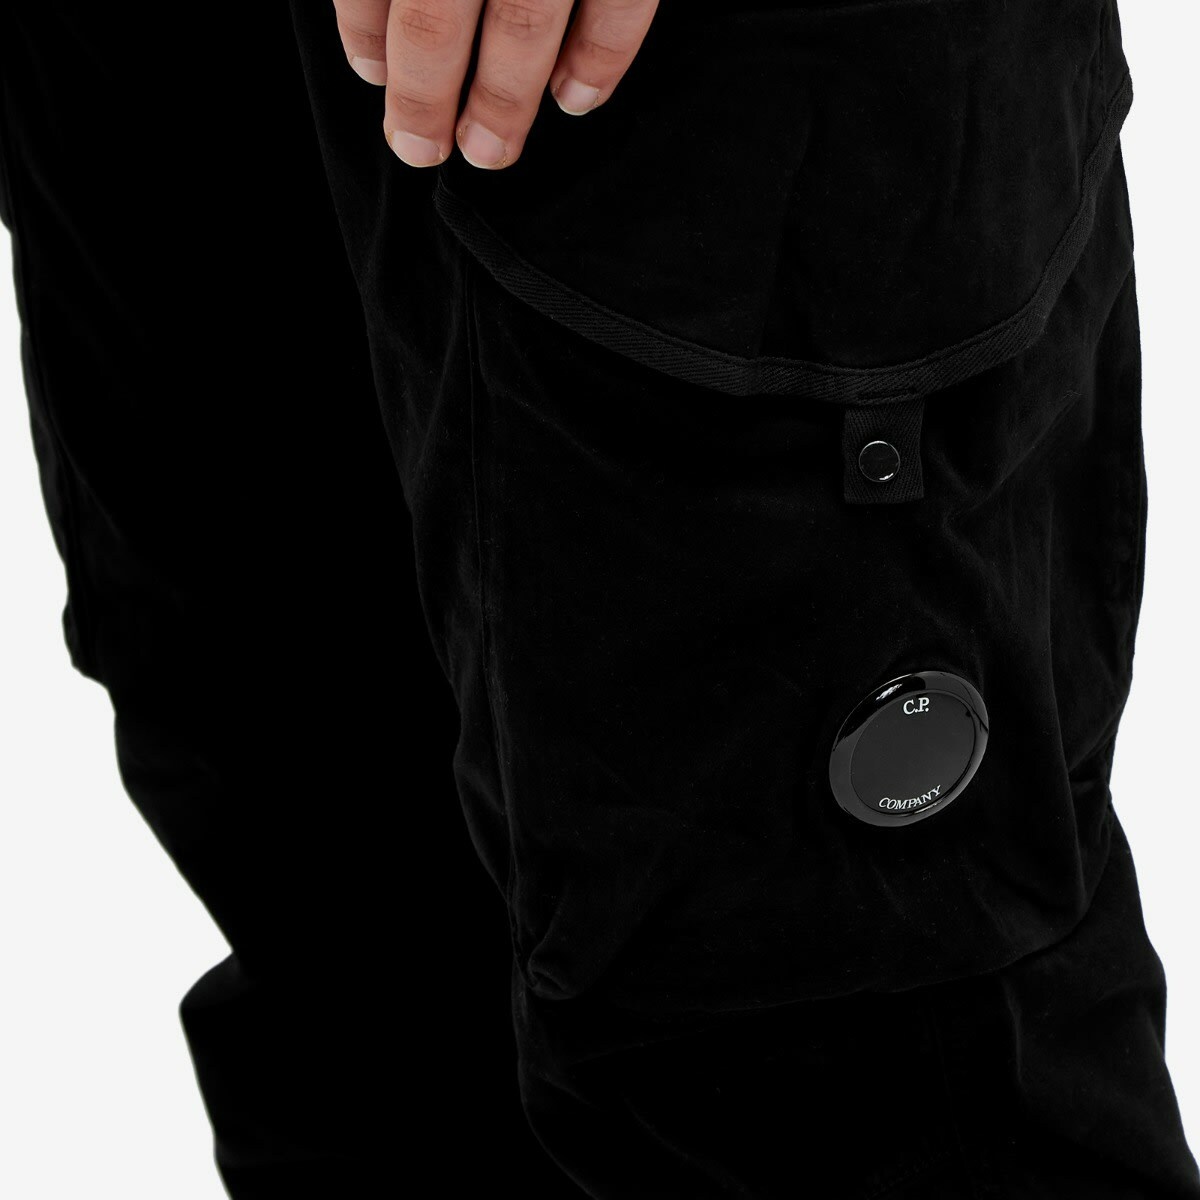 Buy GuSo Shopee Men's Cotton Regular Fit 6 Pocket Cargo Pants Regular Fit  Black at Amazon.in